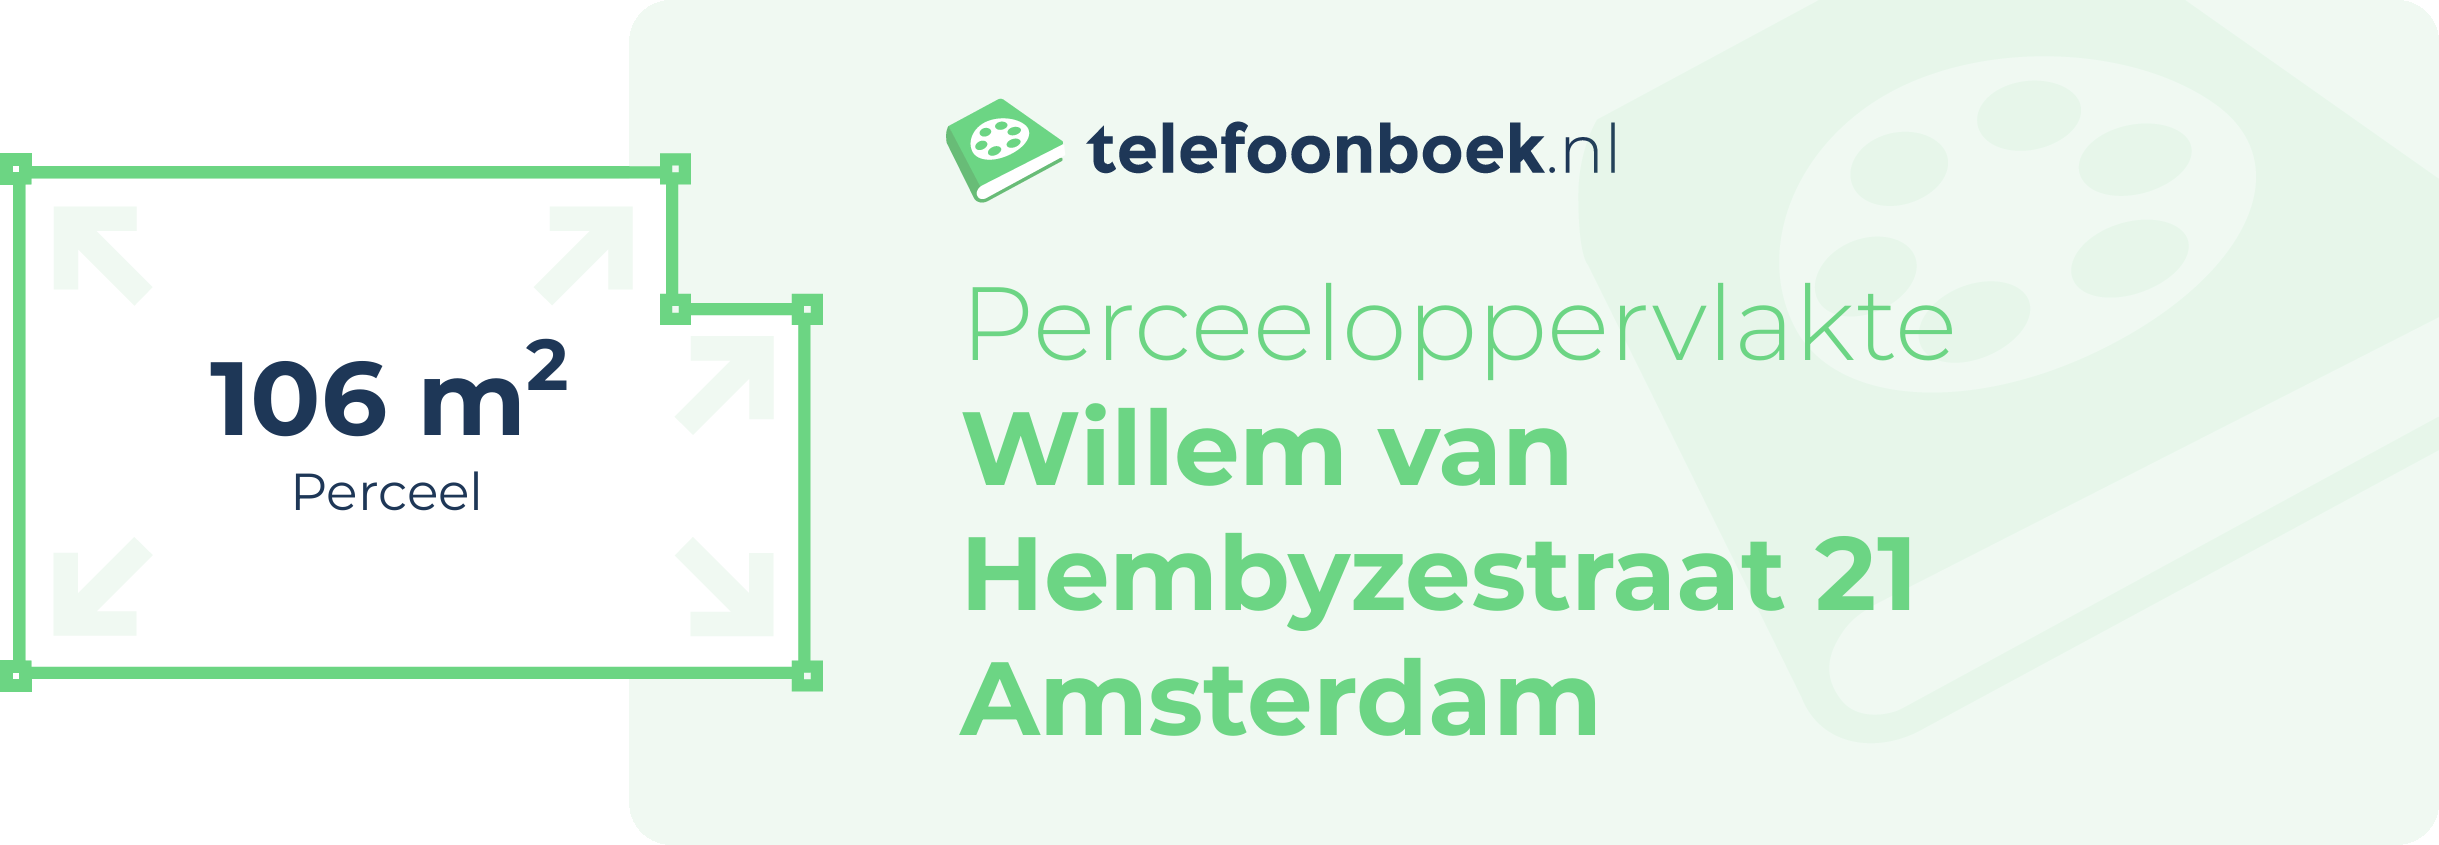 Perceeloppervlakte Willem Van Hembyzestraat 21 Amsterdam